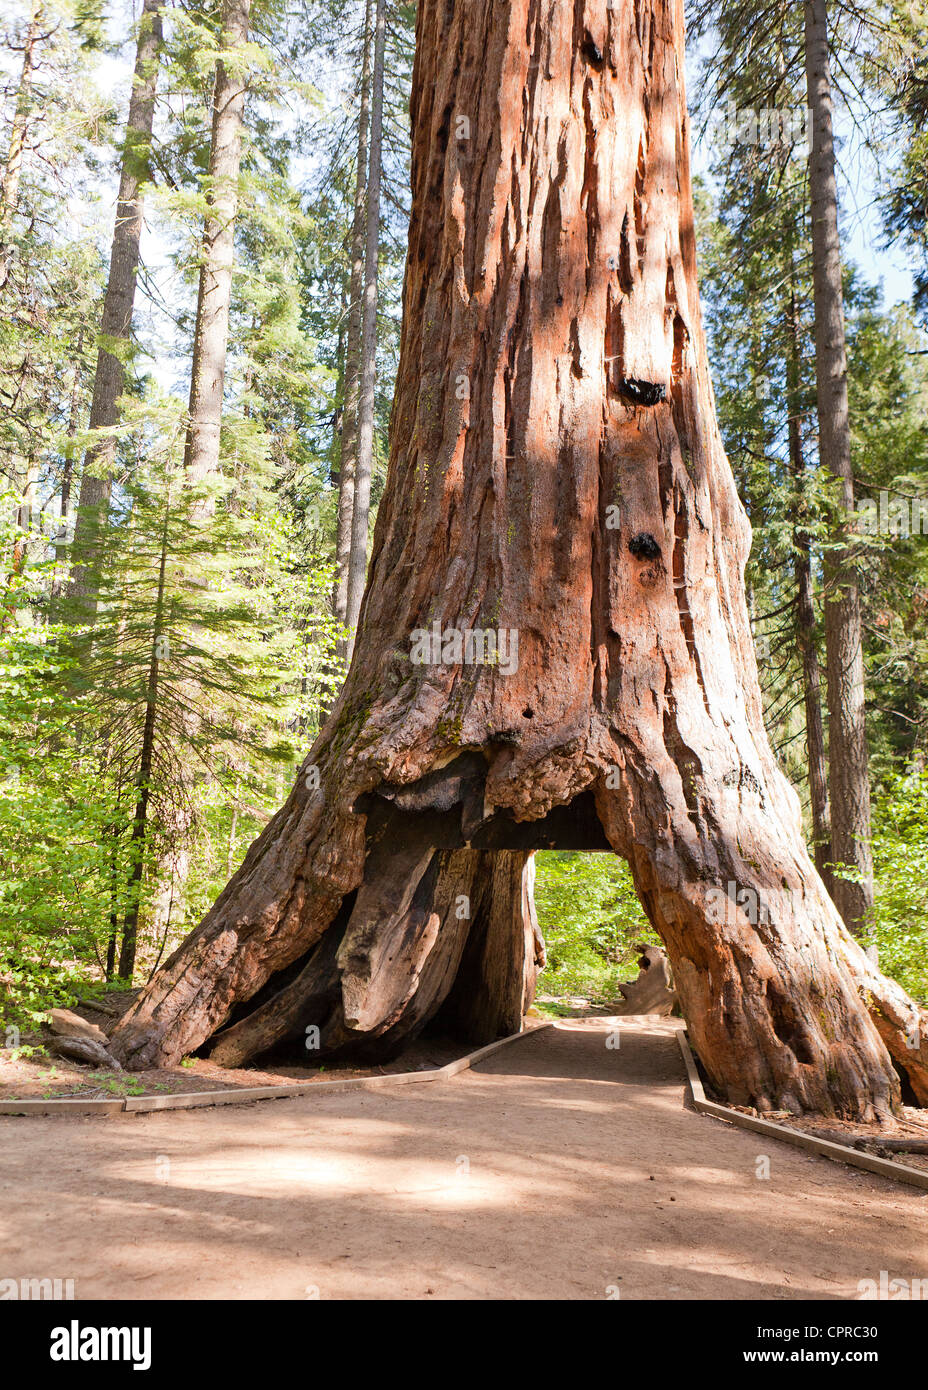 The giant sequoia Pioneer Cabin Tree - Calaveras Big Tree State Park, California USA Stock Photo